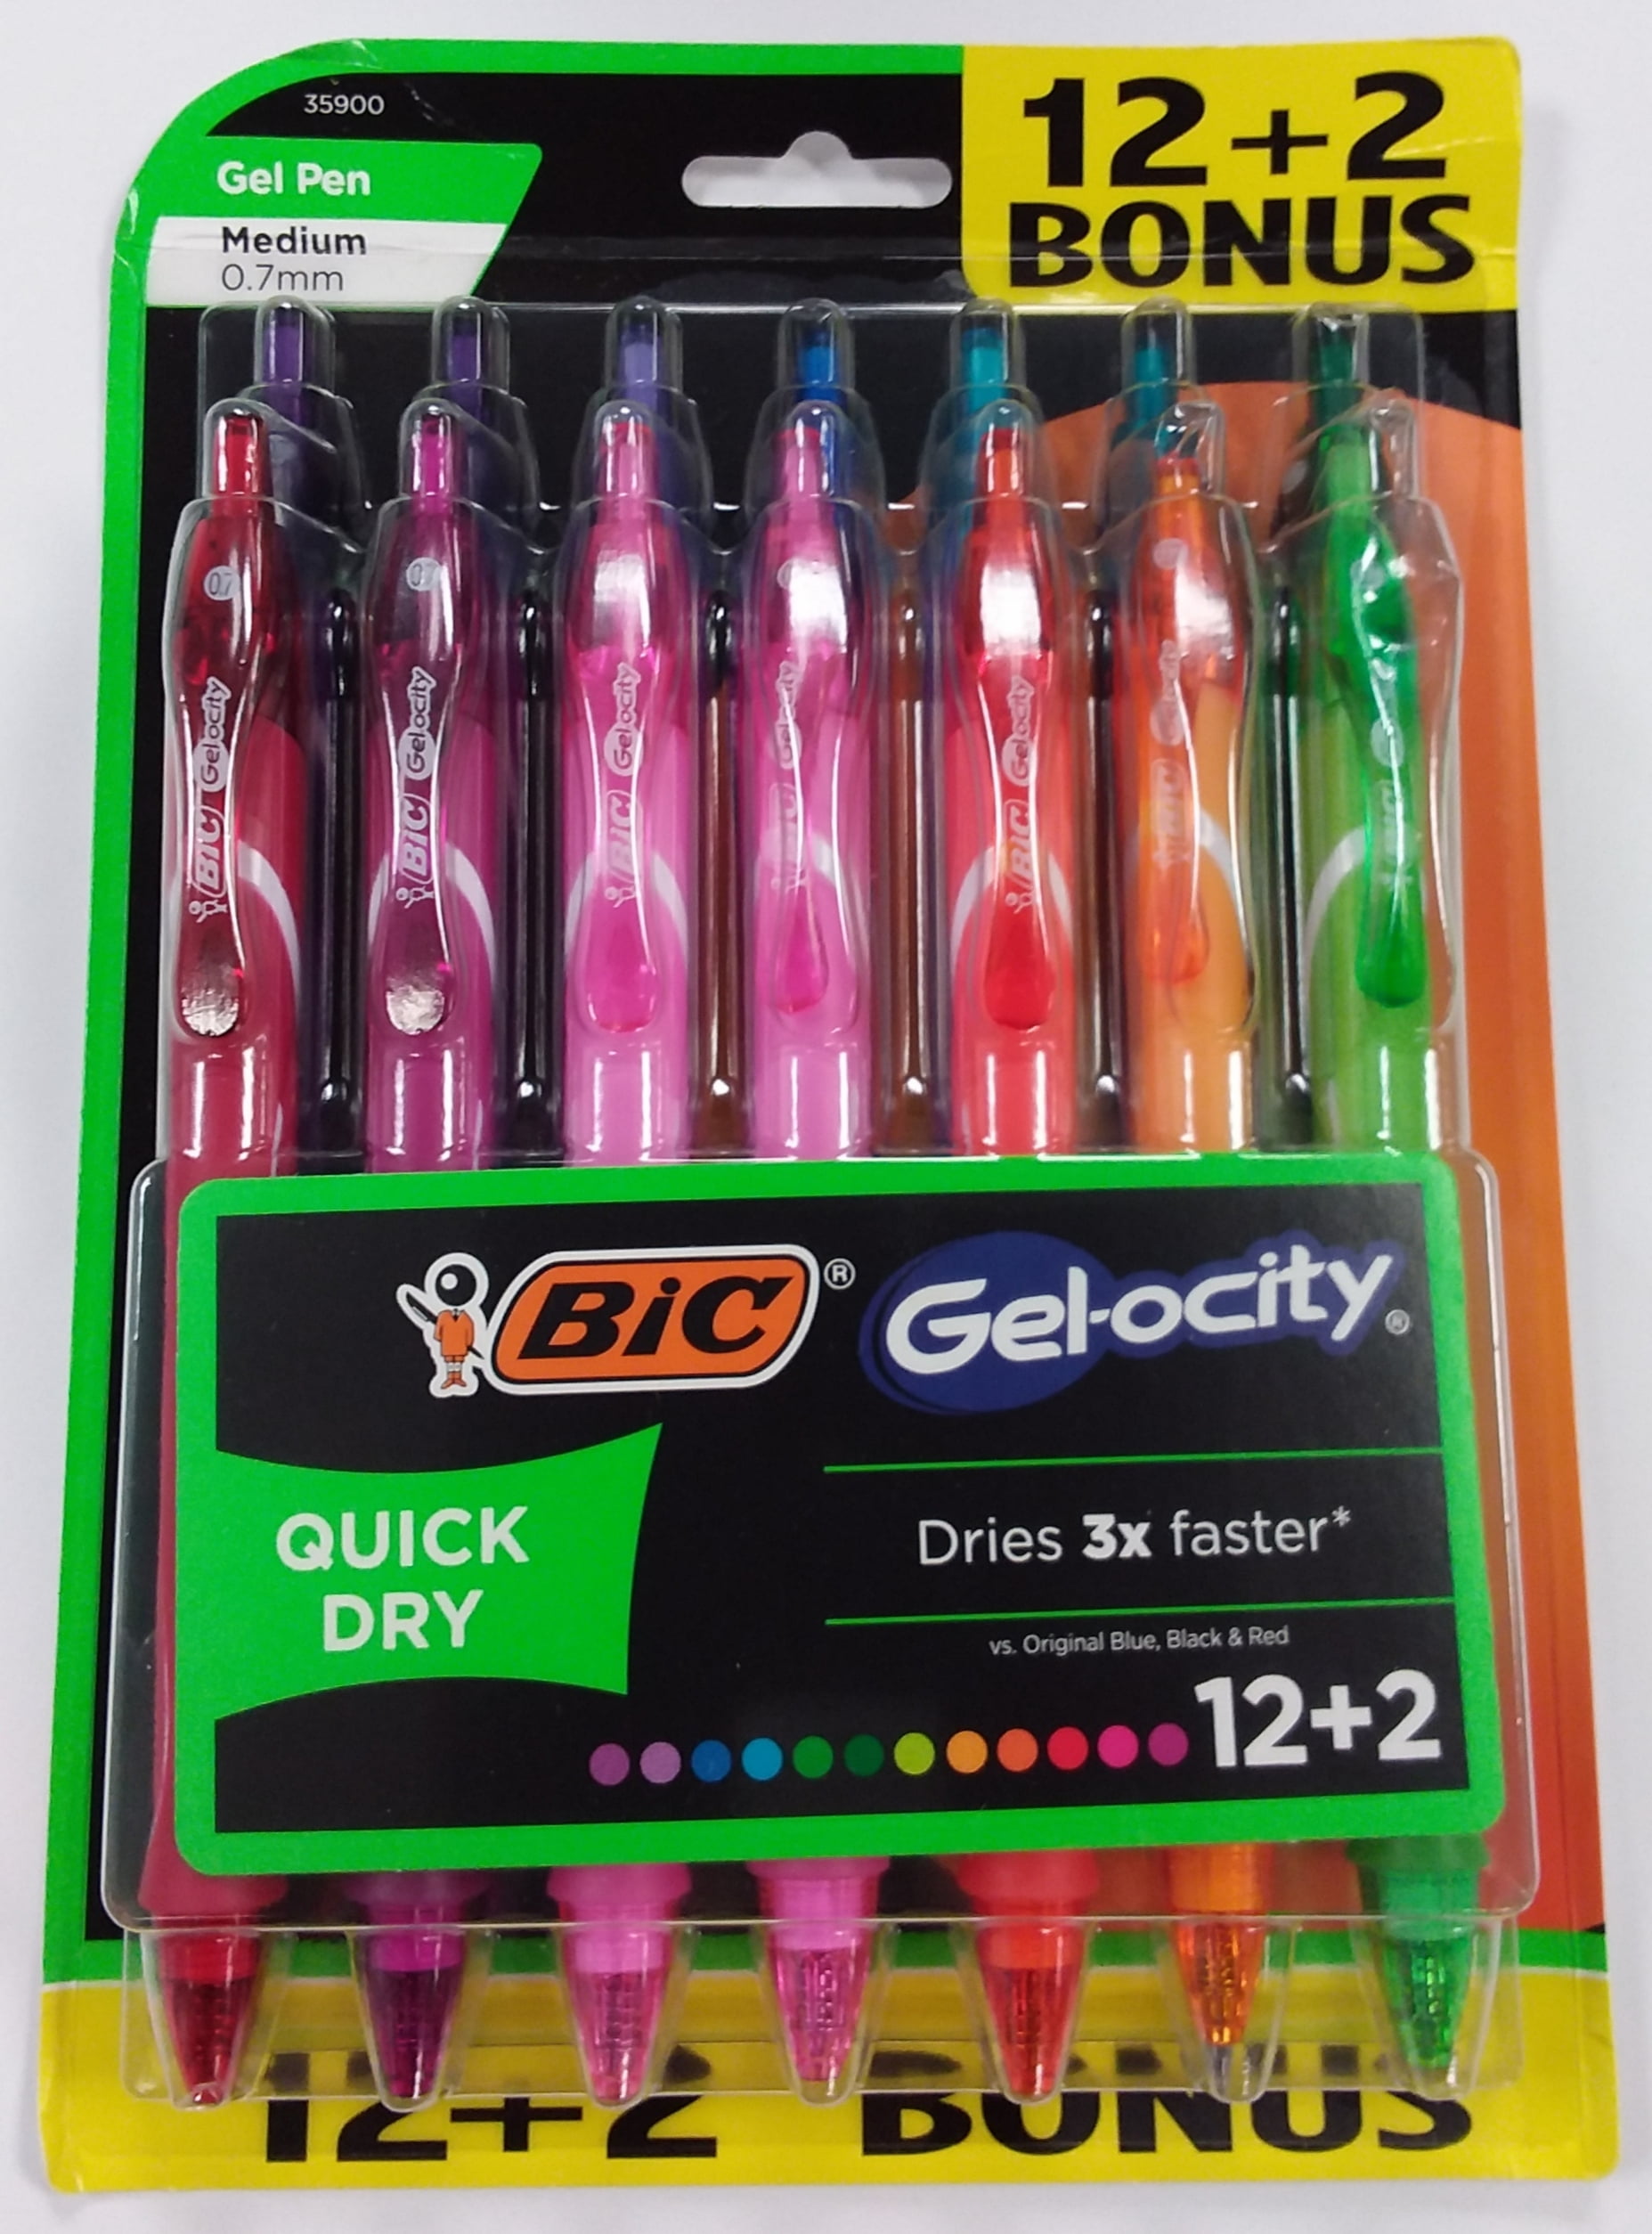 bic-12-2-gel-ocity-quick-dry-gel-pen-fsh-walmart-inventory-checker